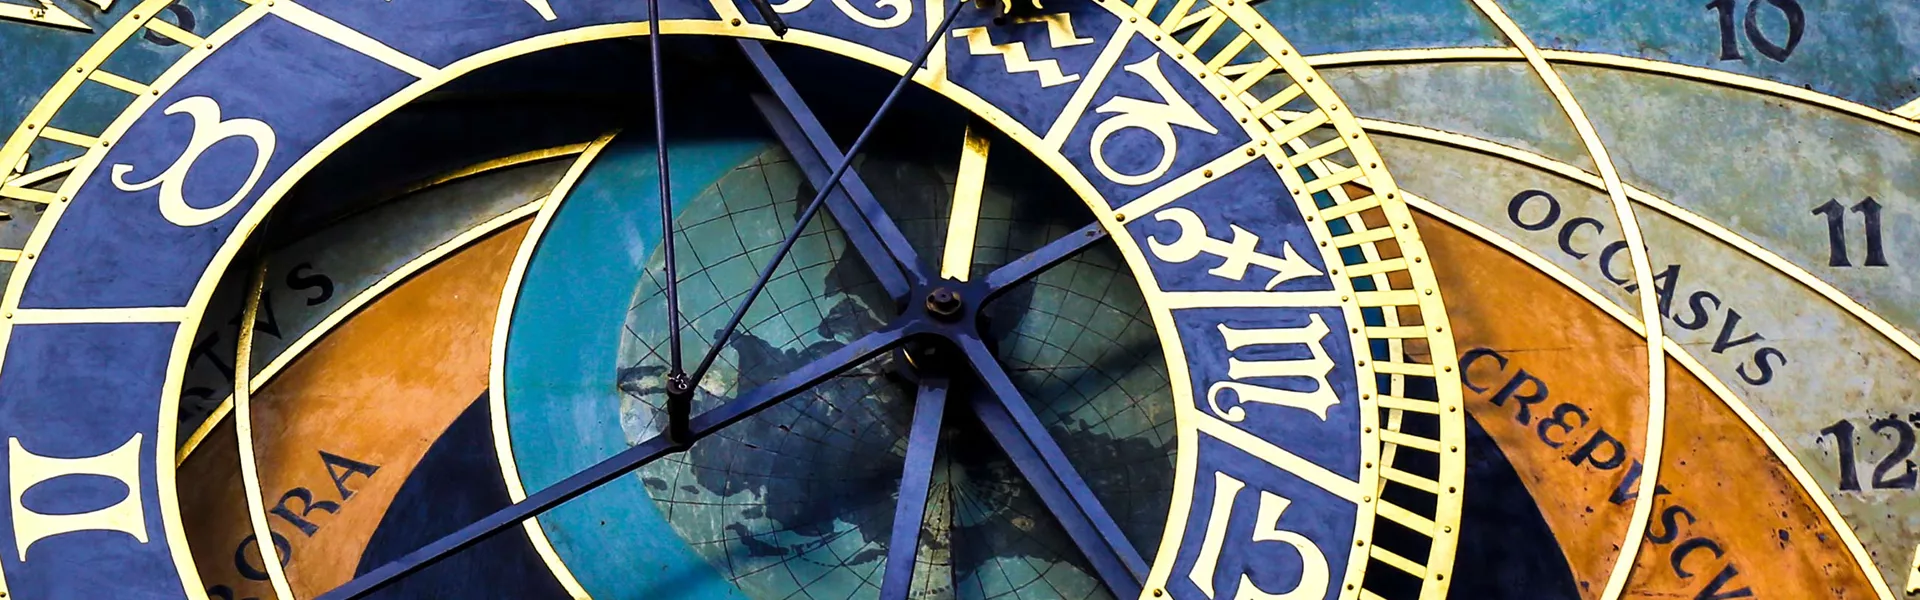 Astronomic clock Prazski Orloj in Pgargue, Czech Republic